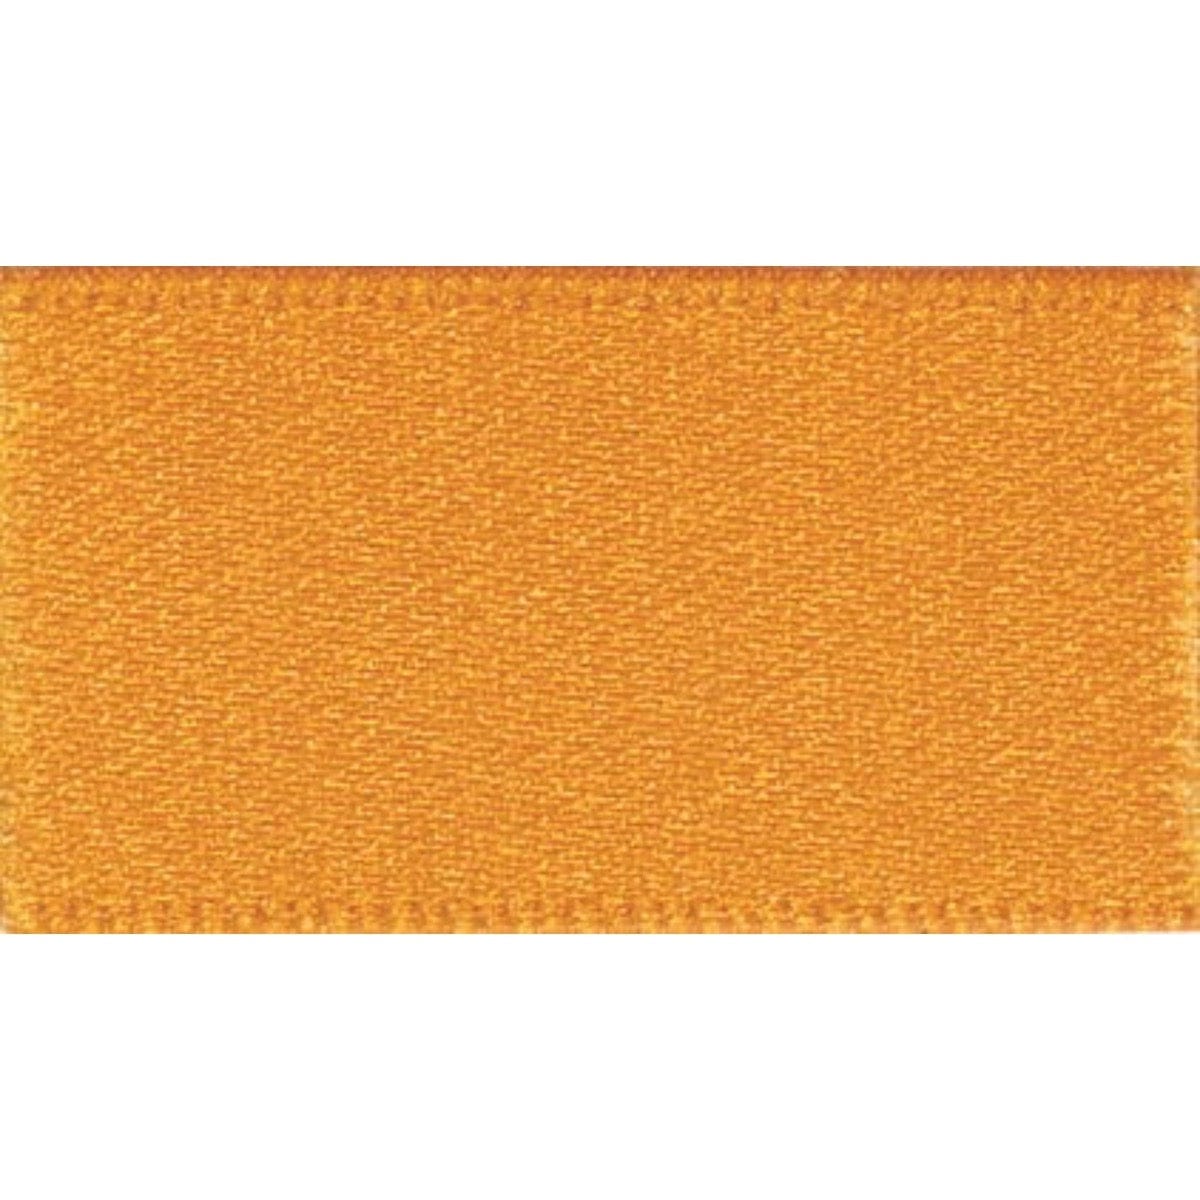 Double Faced Satin Marigold Orange: 3mm wide. Price per metre.